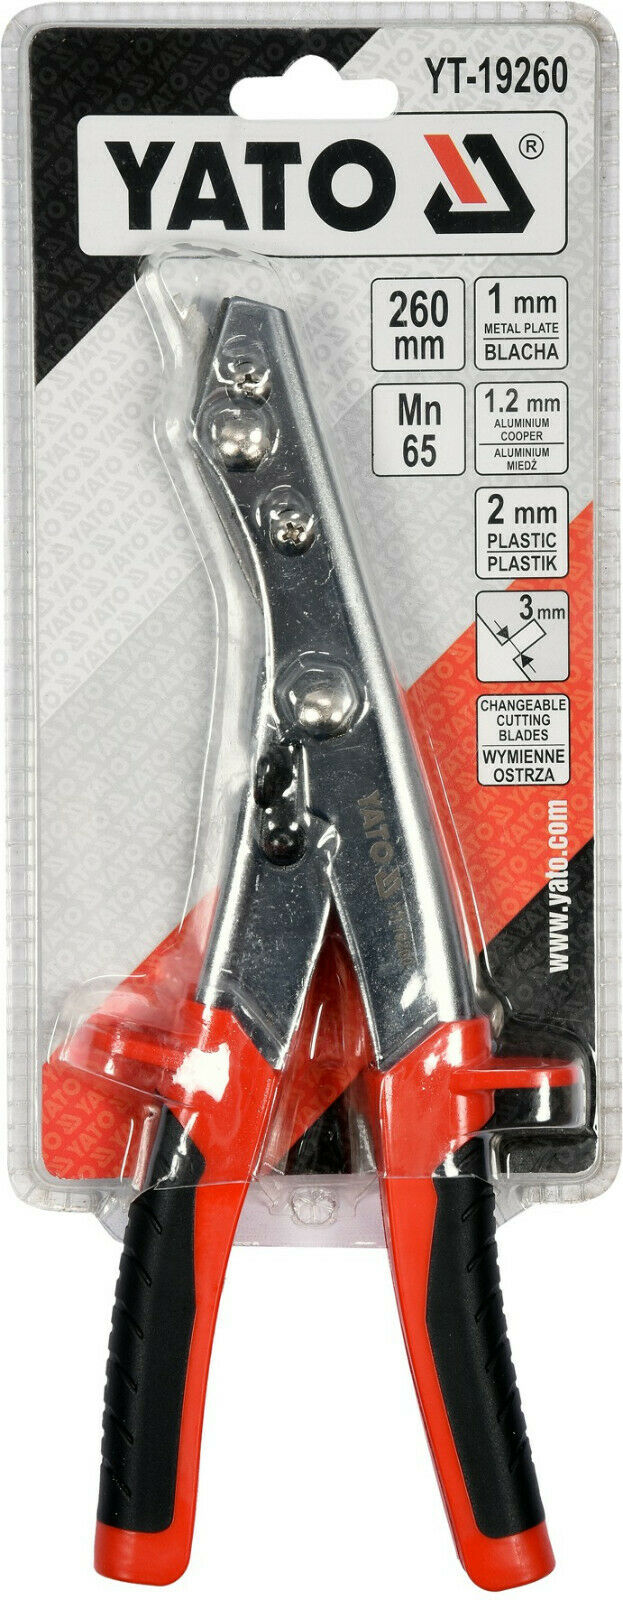 YATO YT-19260 Matrix sheet metal scissors tinnibble nibbler tongue hand-nibble metal